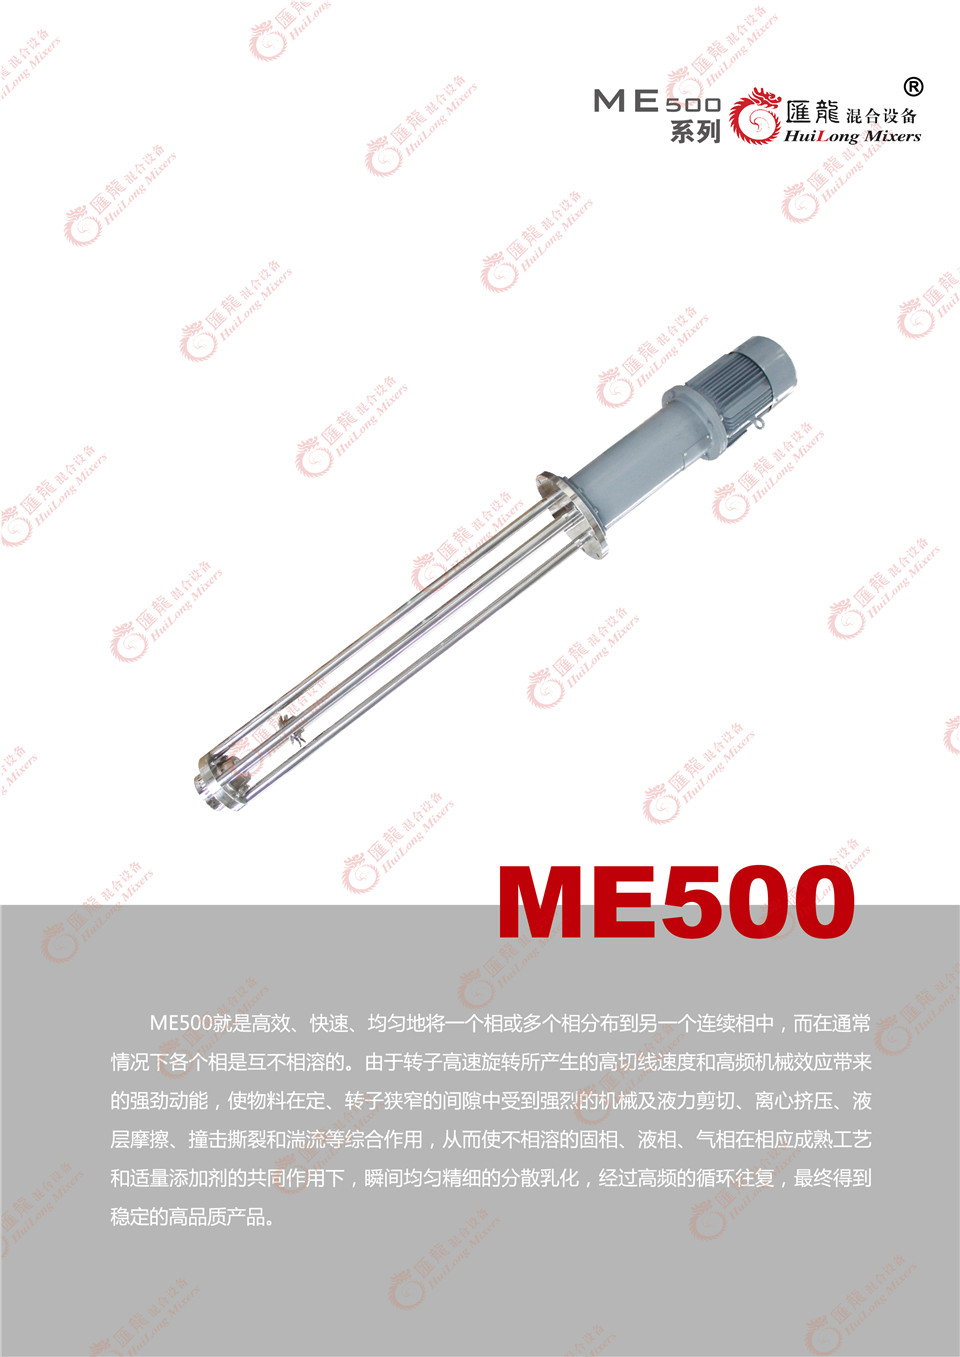 ME500-耐压型乳化机图片